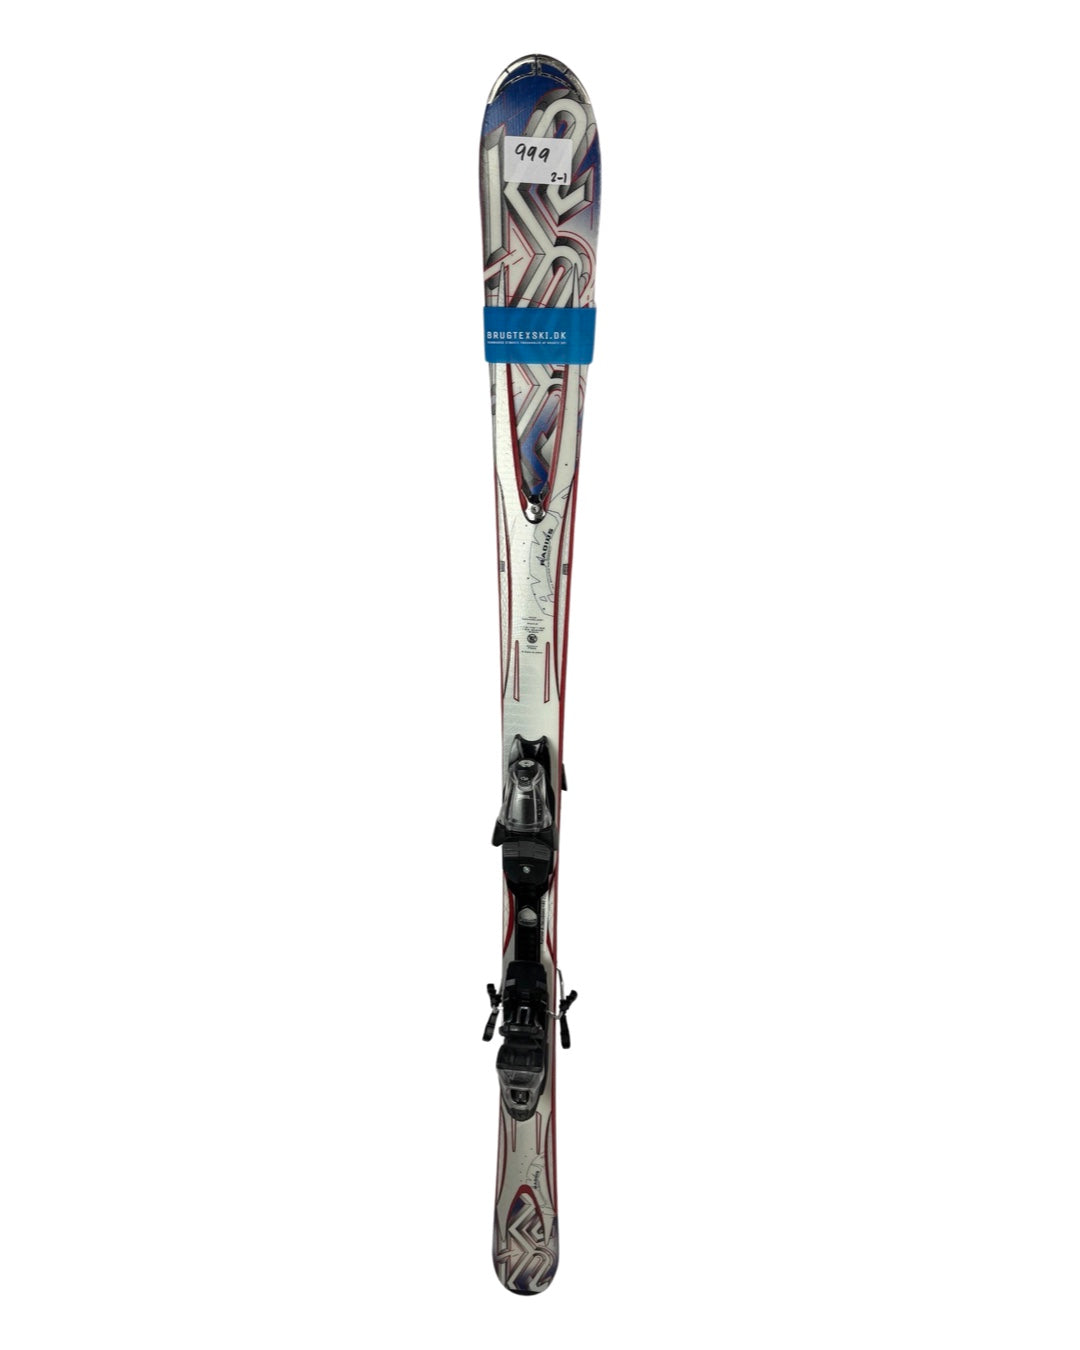 Voksen ski - blandet 999 2